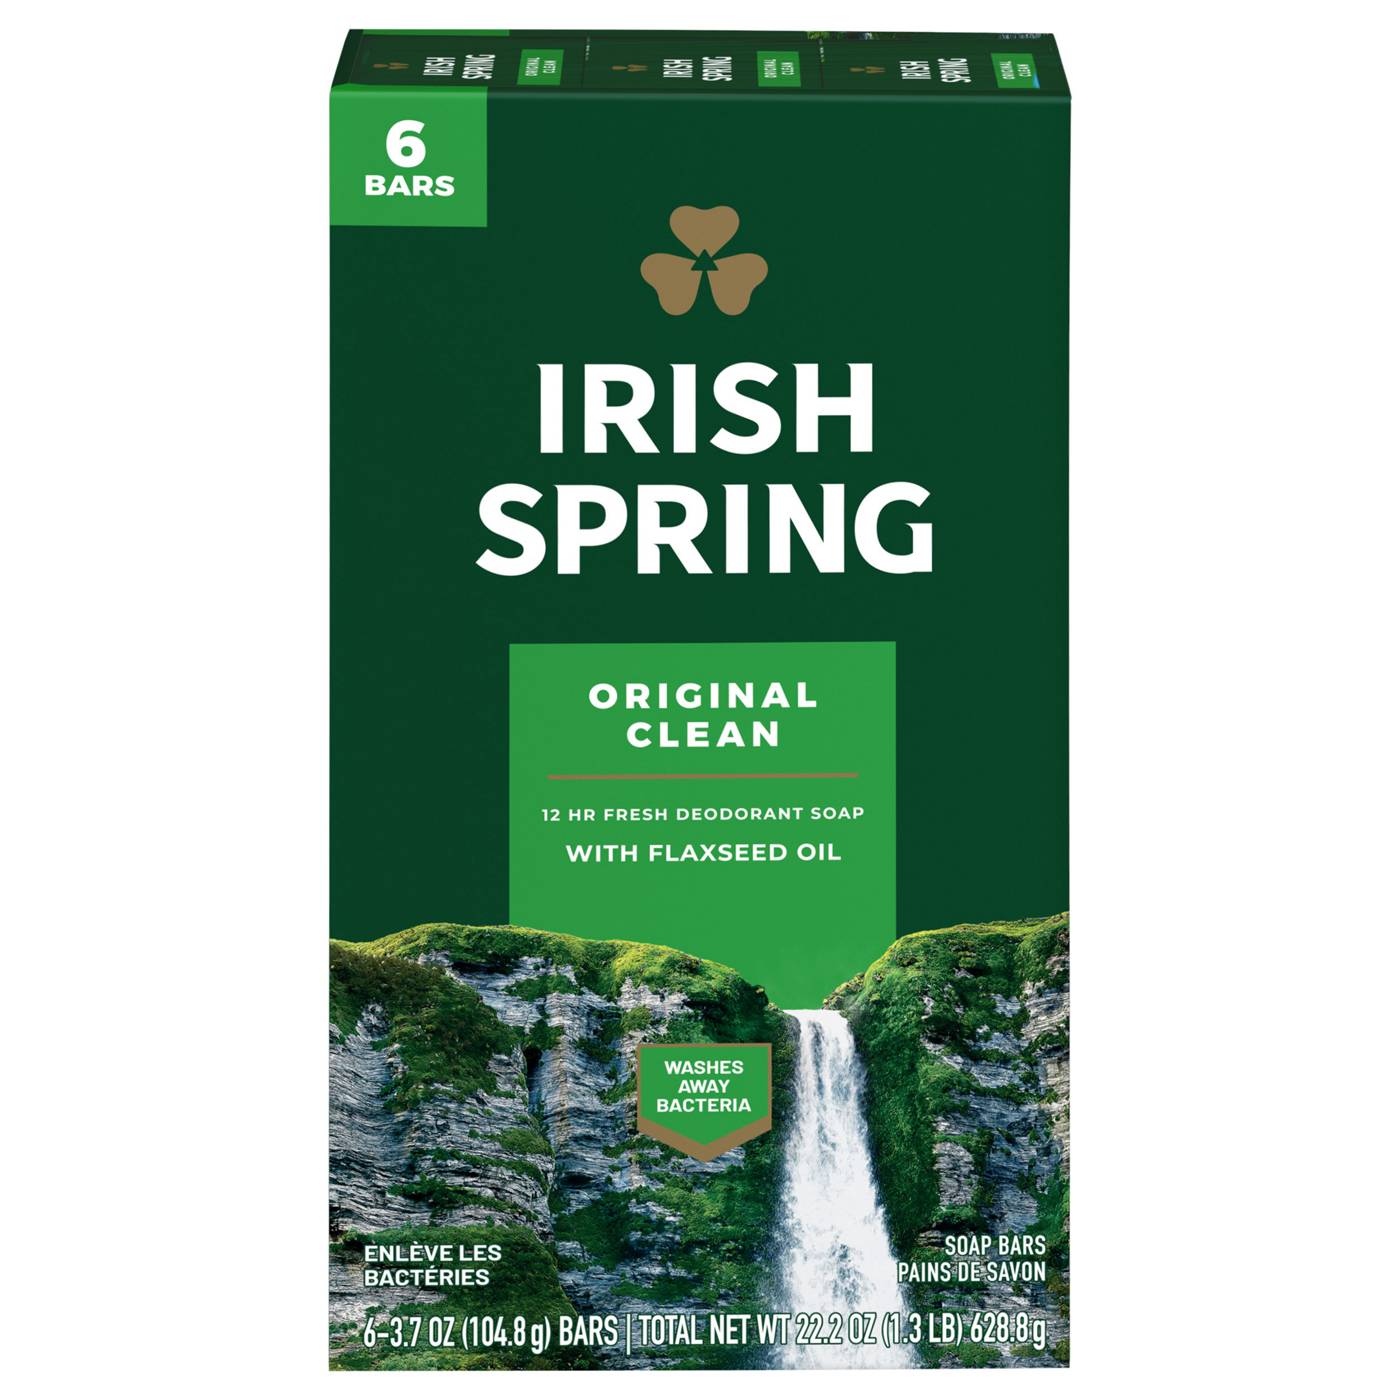 Irish Spring Original Clean Deodorant Bar Soap for Men; image 1 of 10